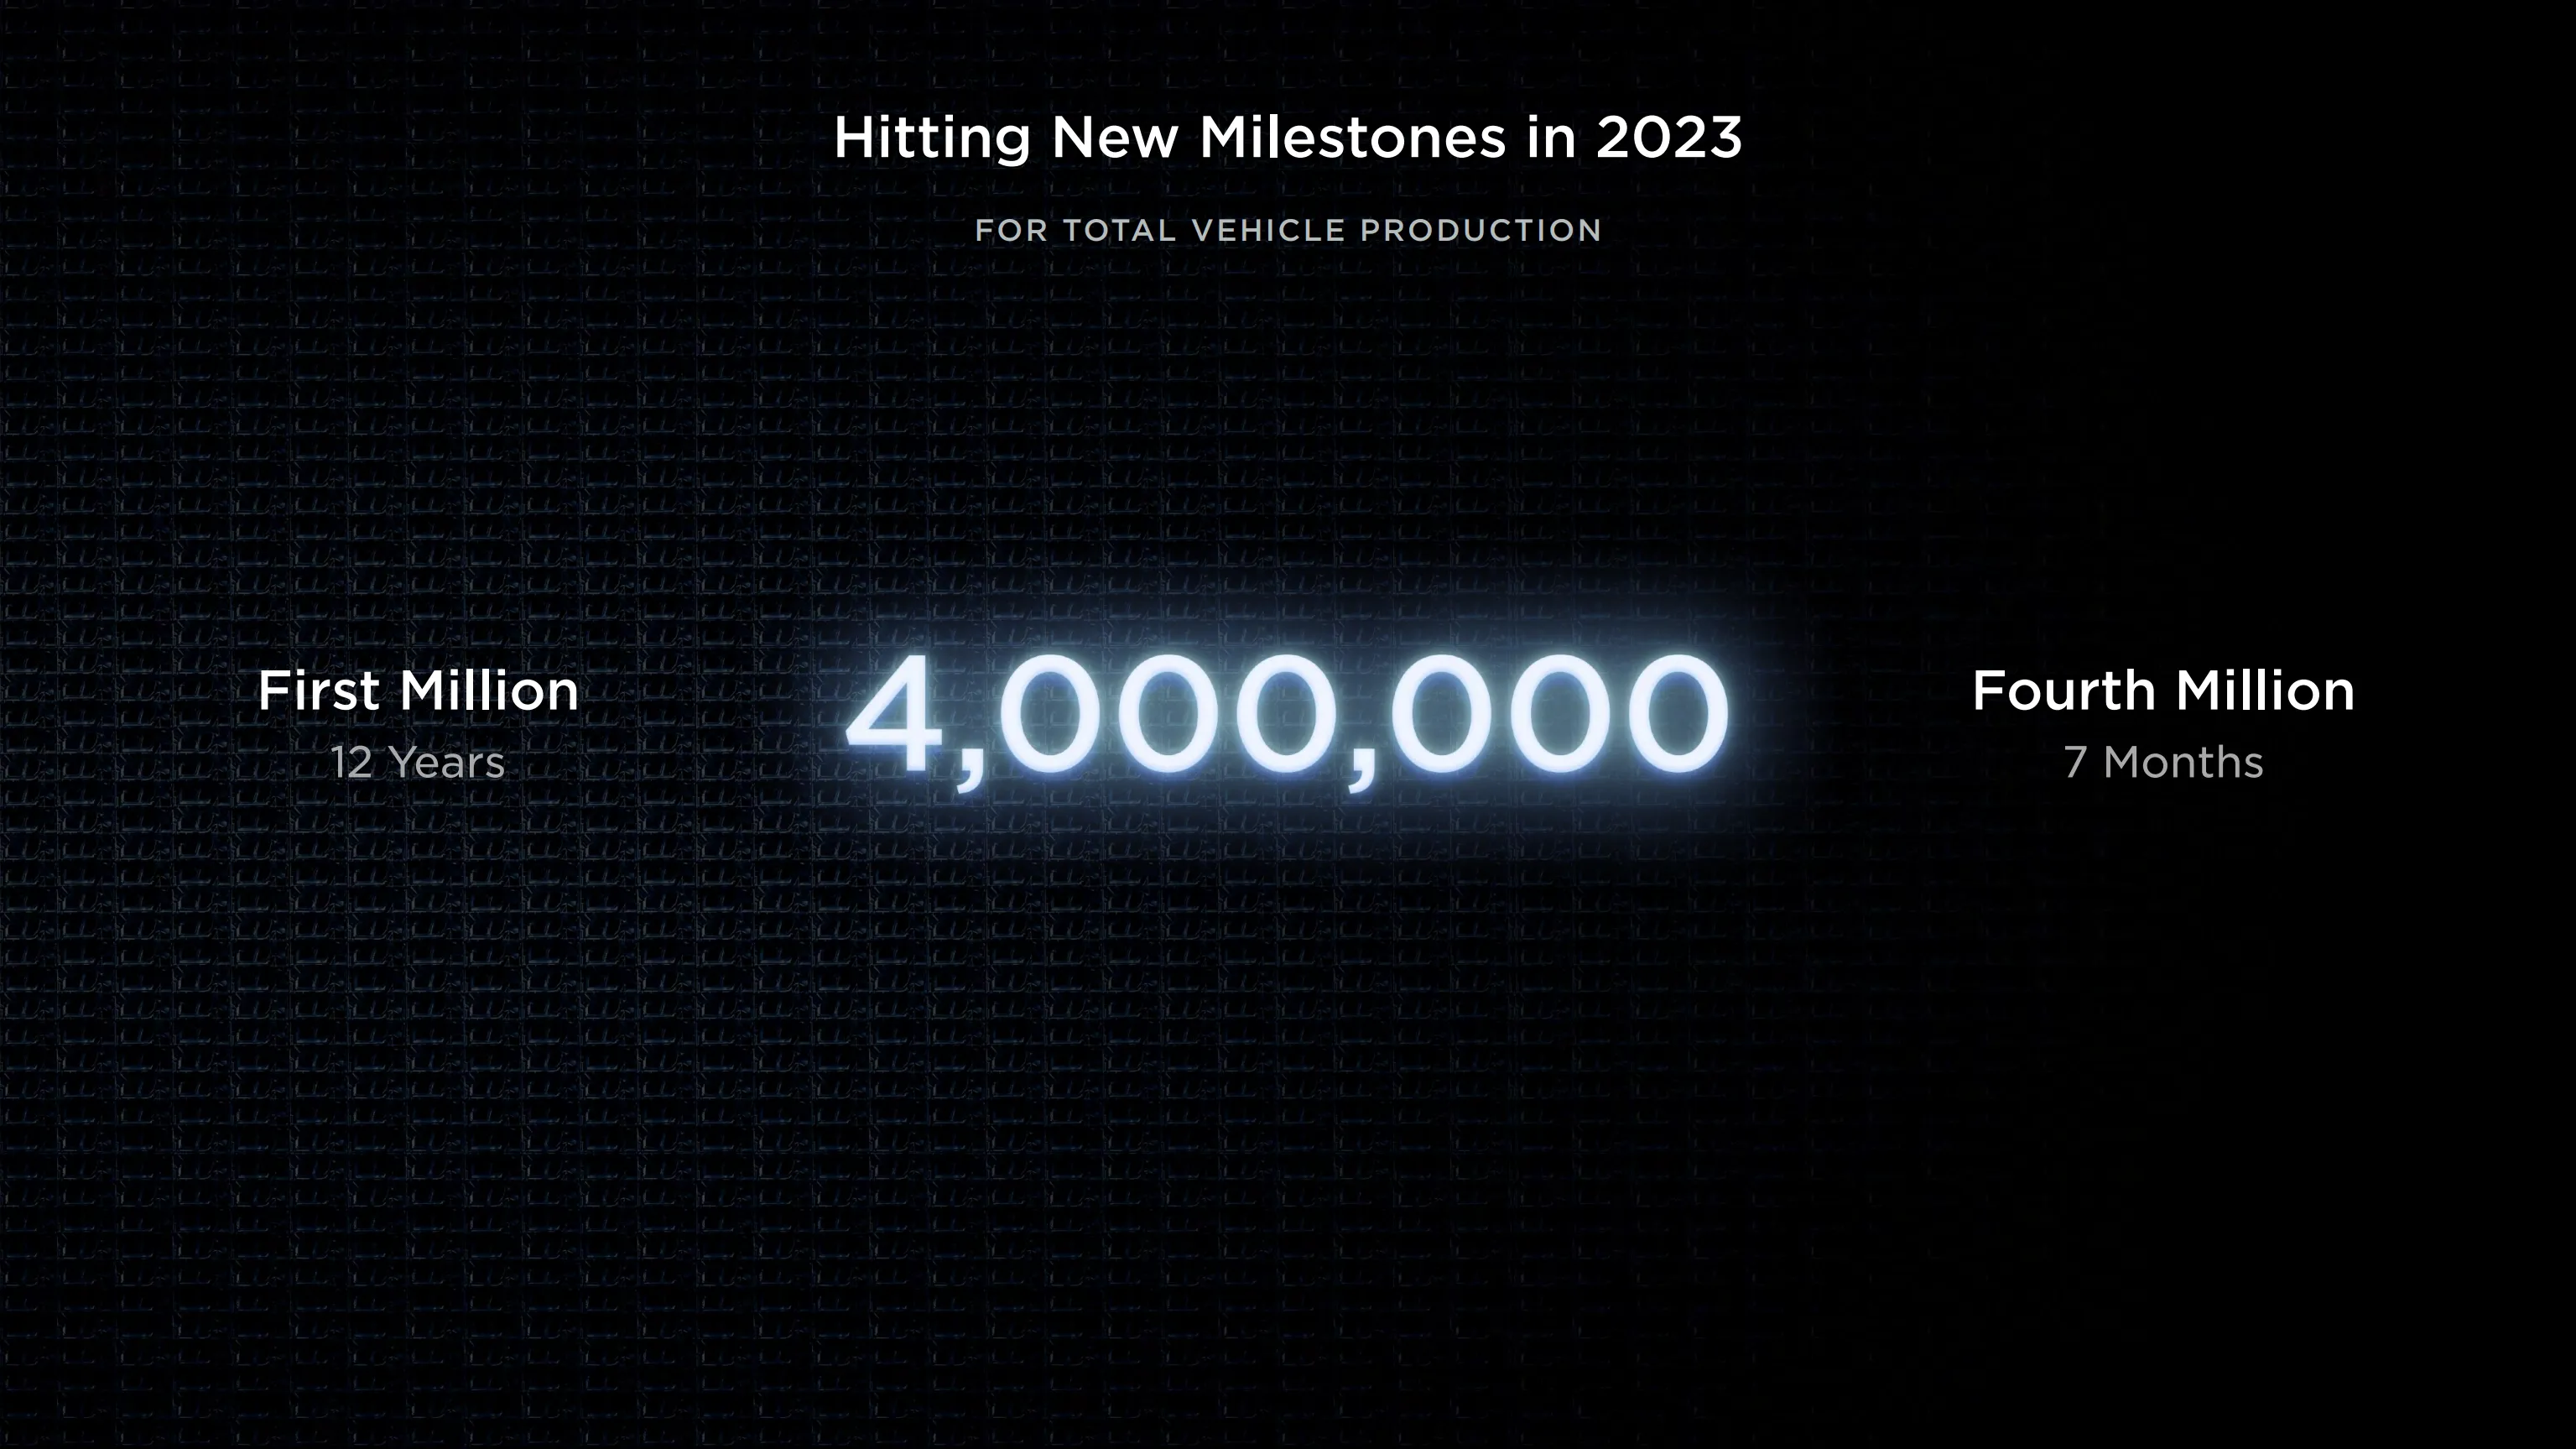 Tesla new milestones in 2023